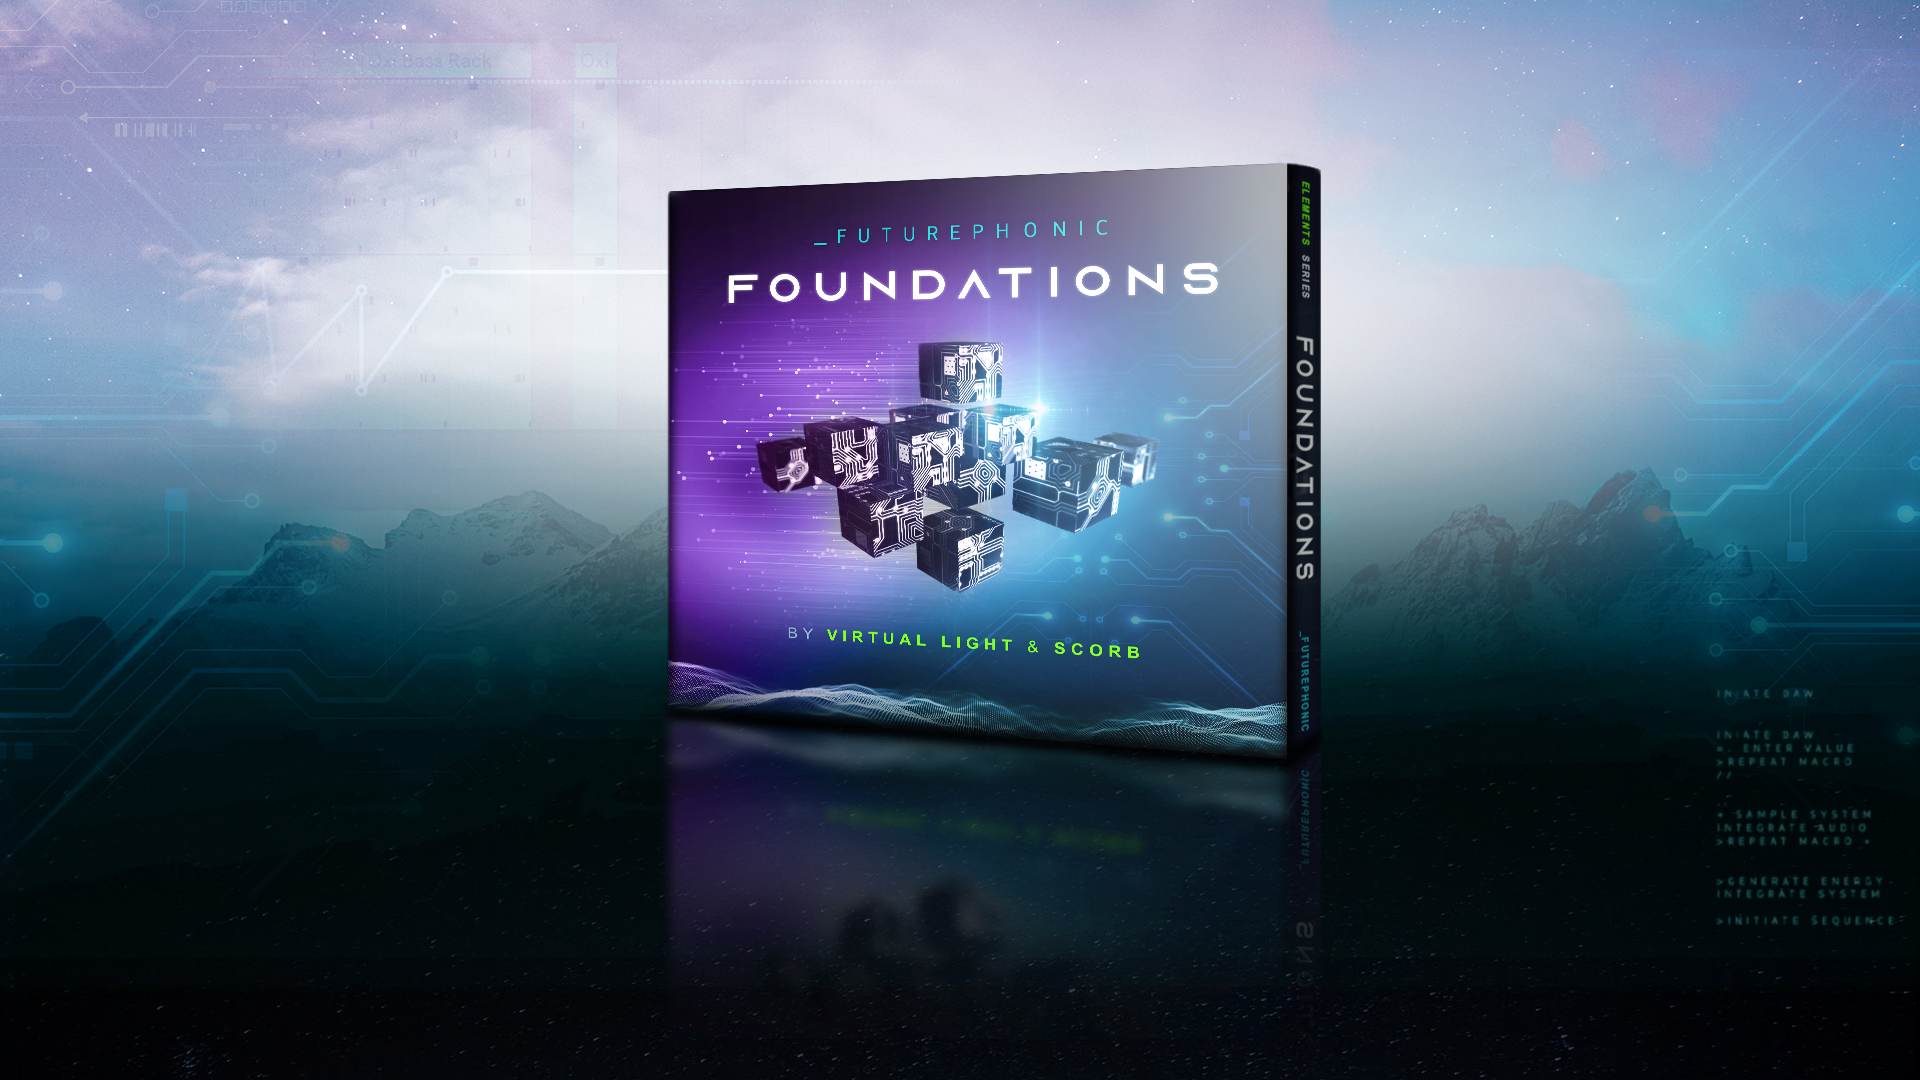 [Foundations] By Virtual Light & Scorb - Futurephonic